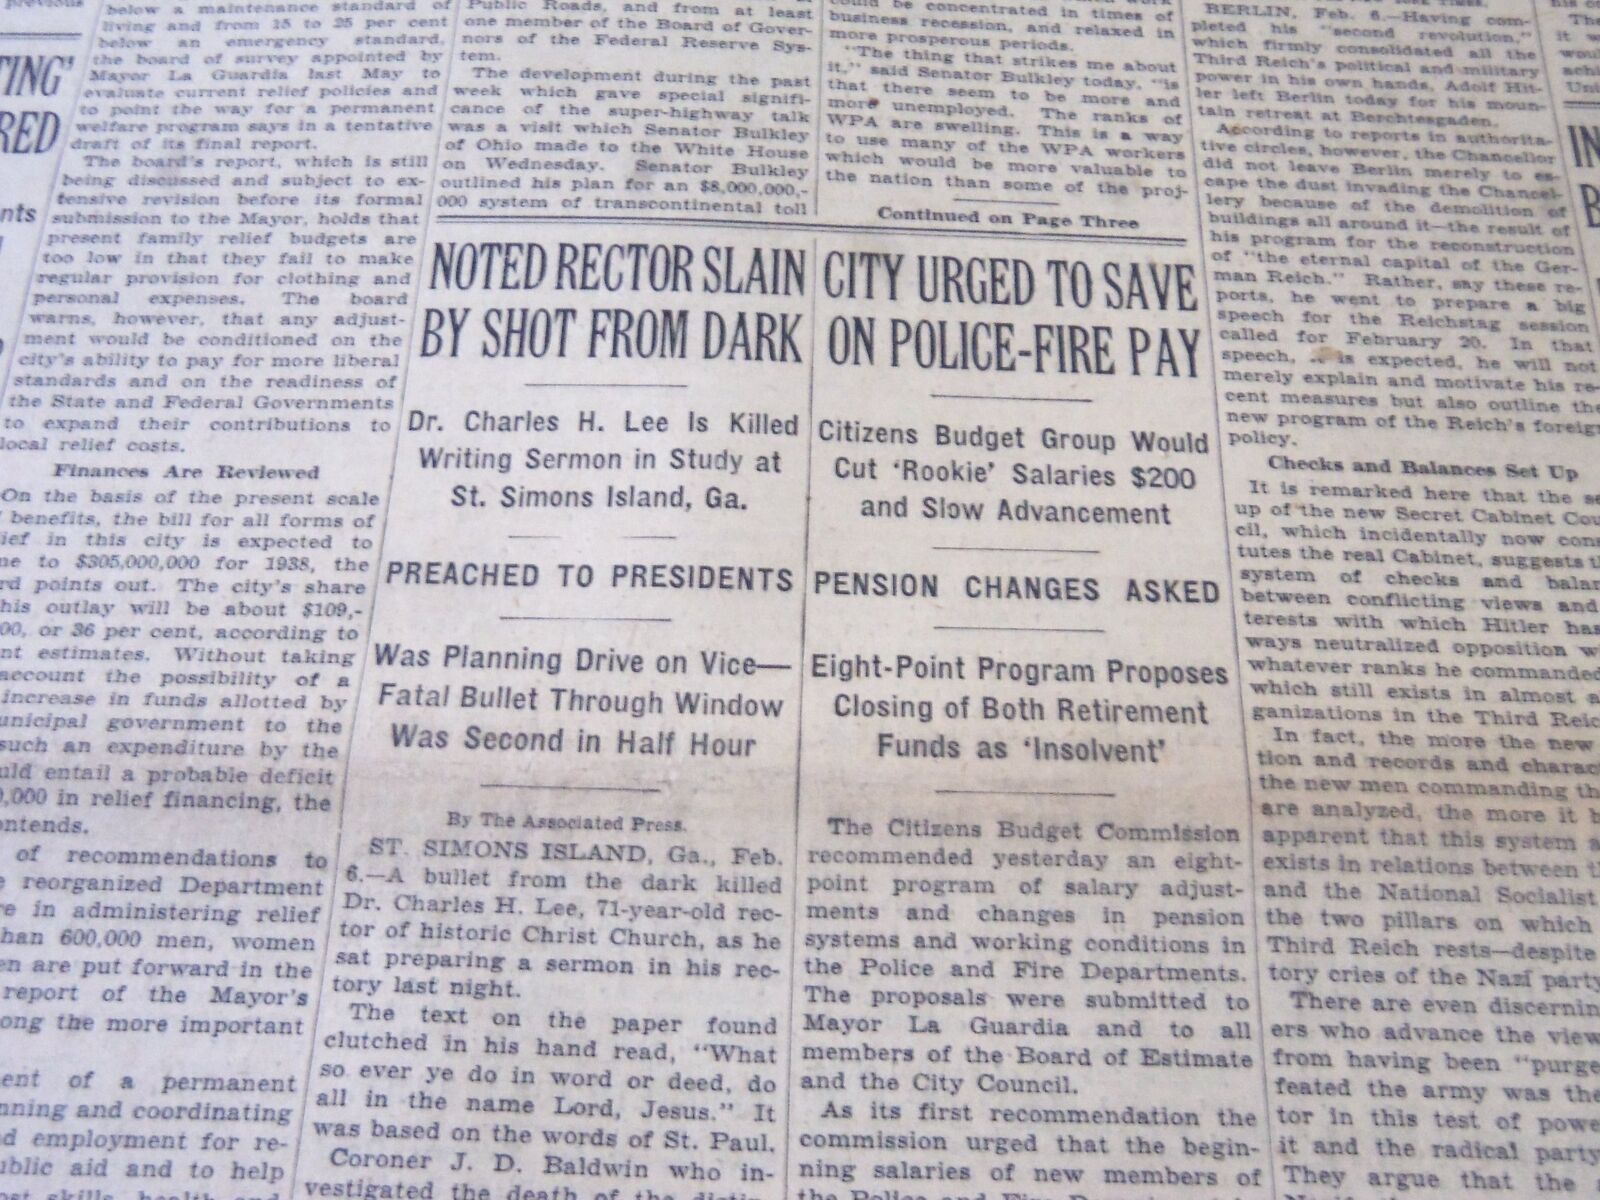 1938 FEB 7 NEW YORK TIMES - DR. CHARLES H. LEE IS KILLED WRITING SERMON- NT 6259